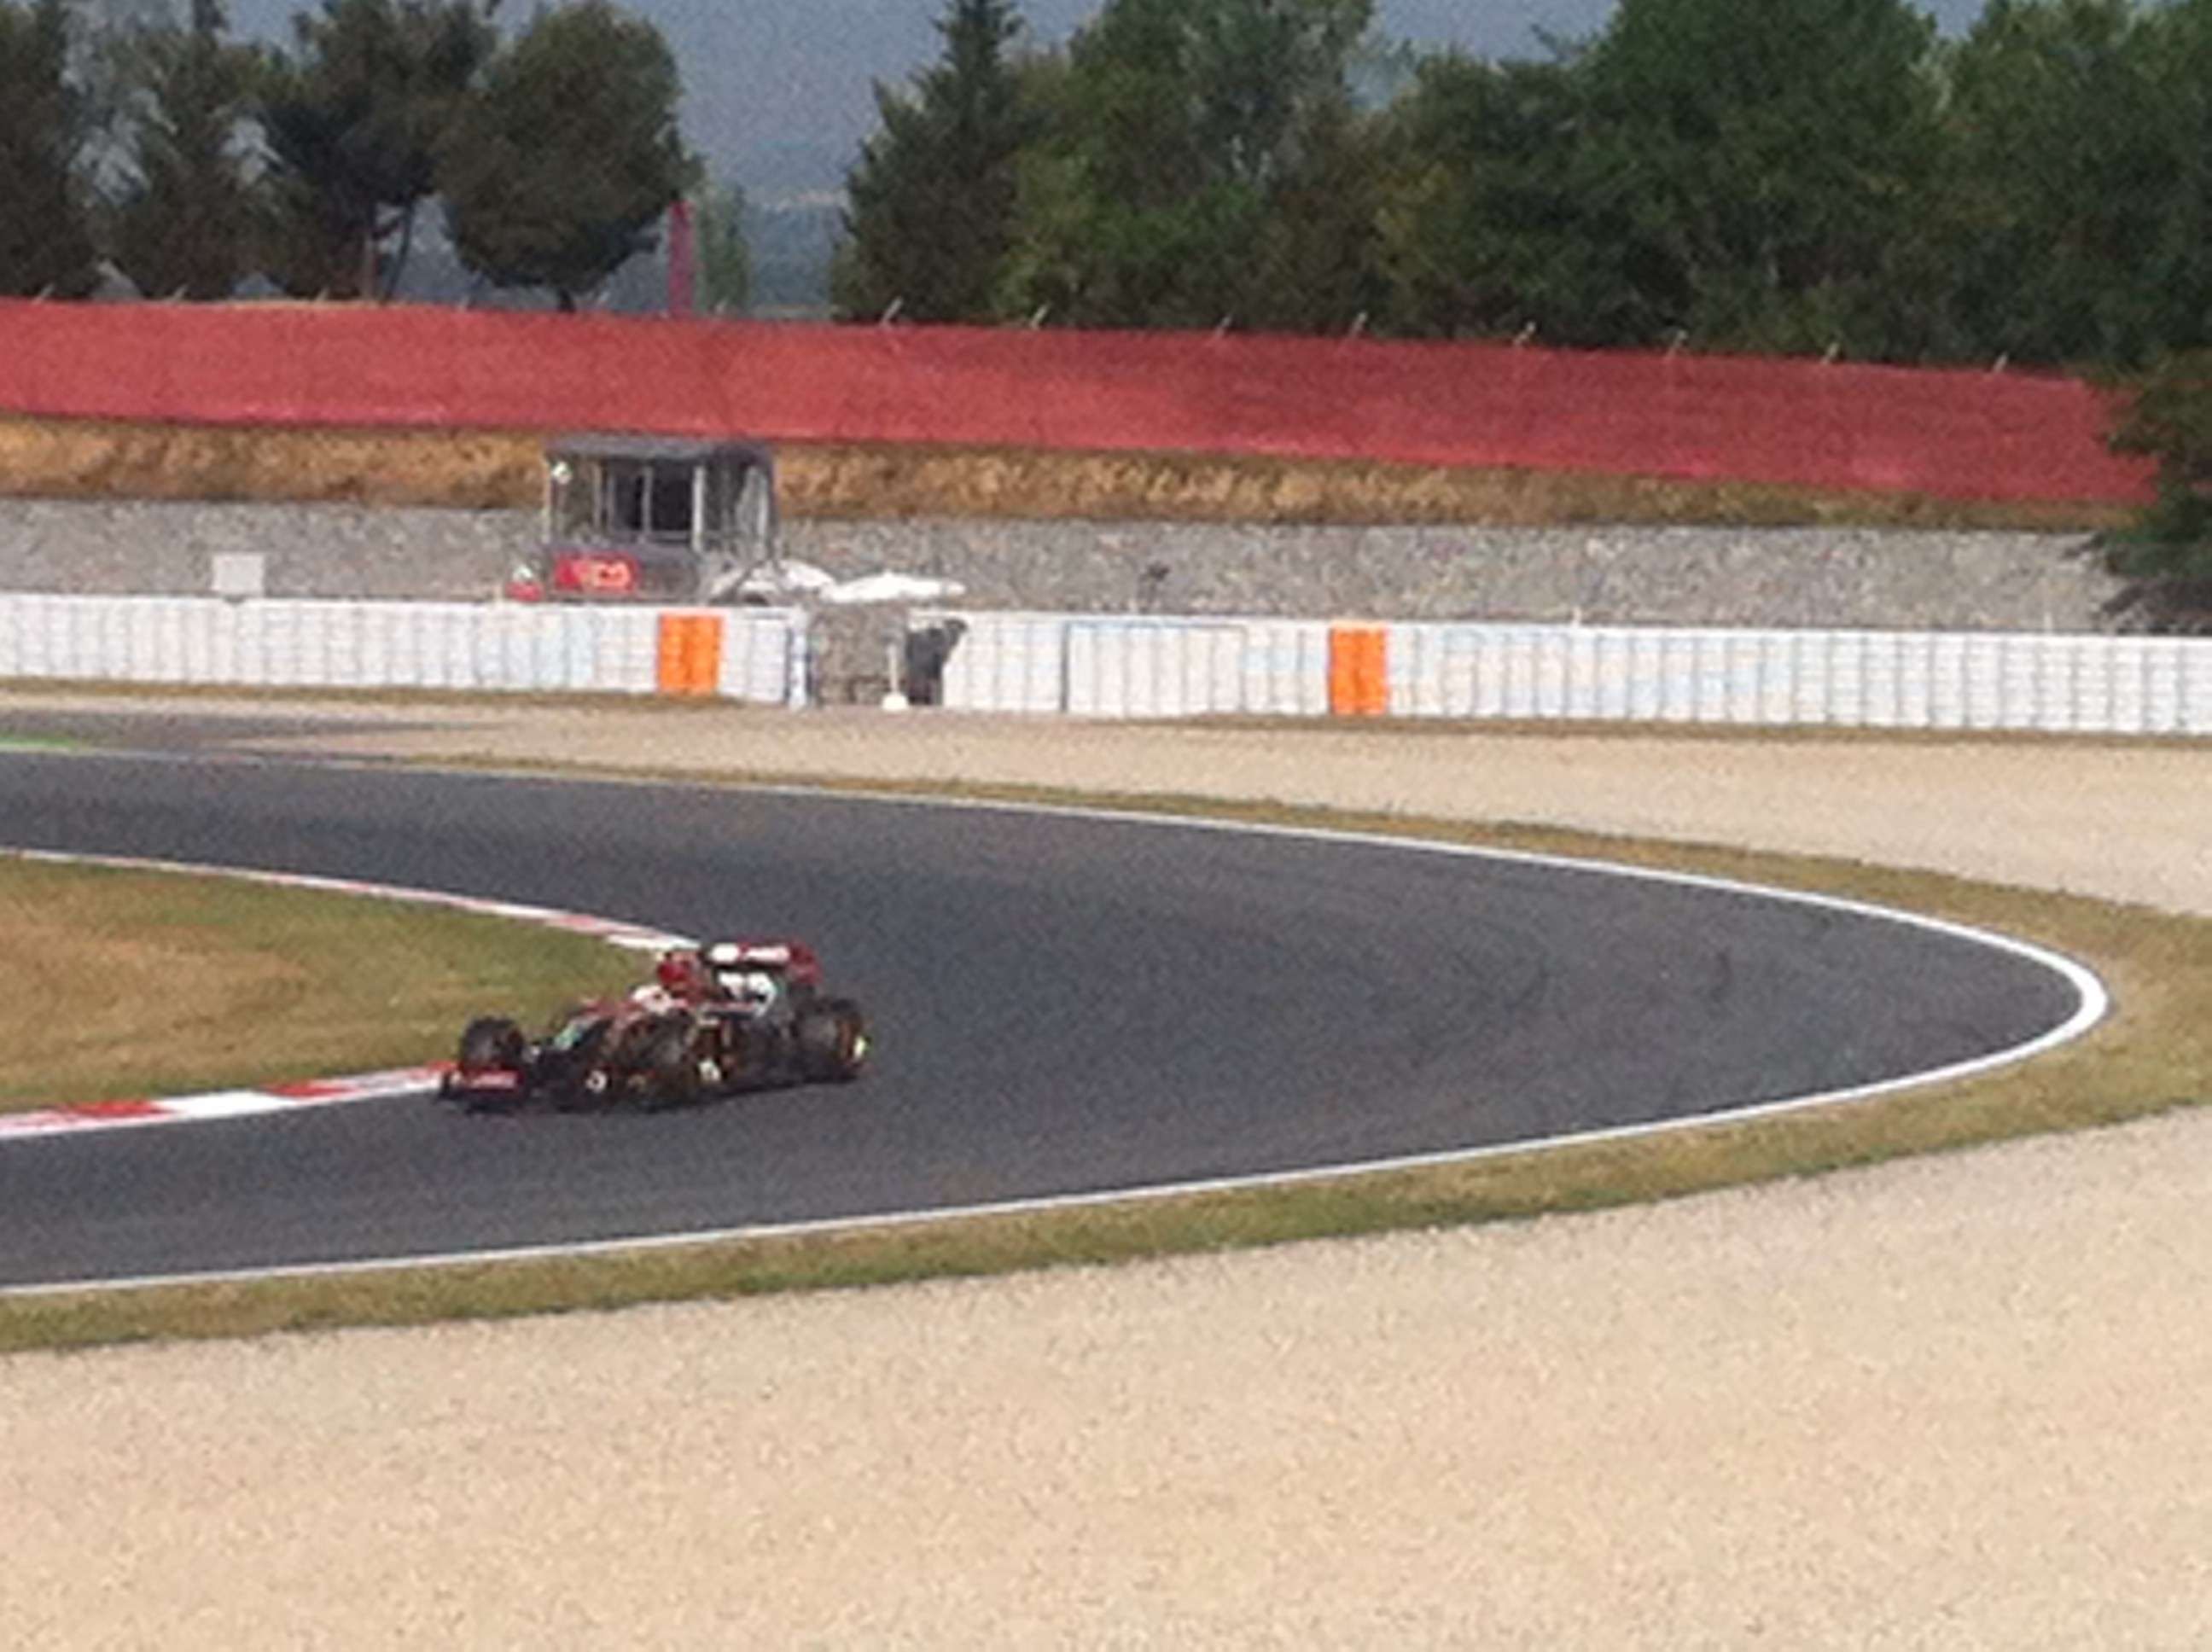 Quedada GP Montmeló F1 2014 + Karting      [#Circuito Cardedeu#   09/05/2014] - Página 2 Img_8011